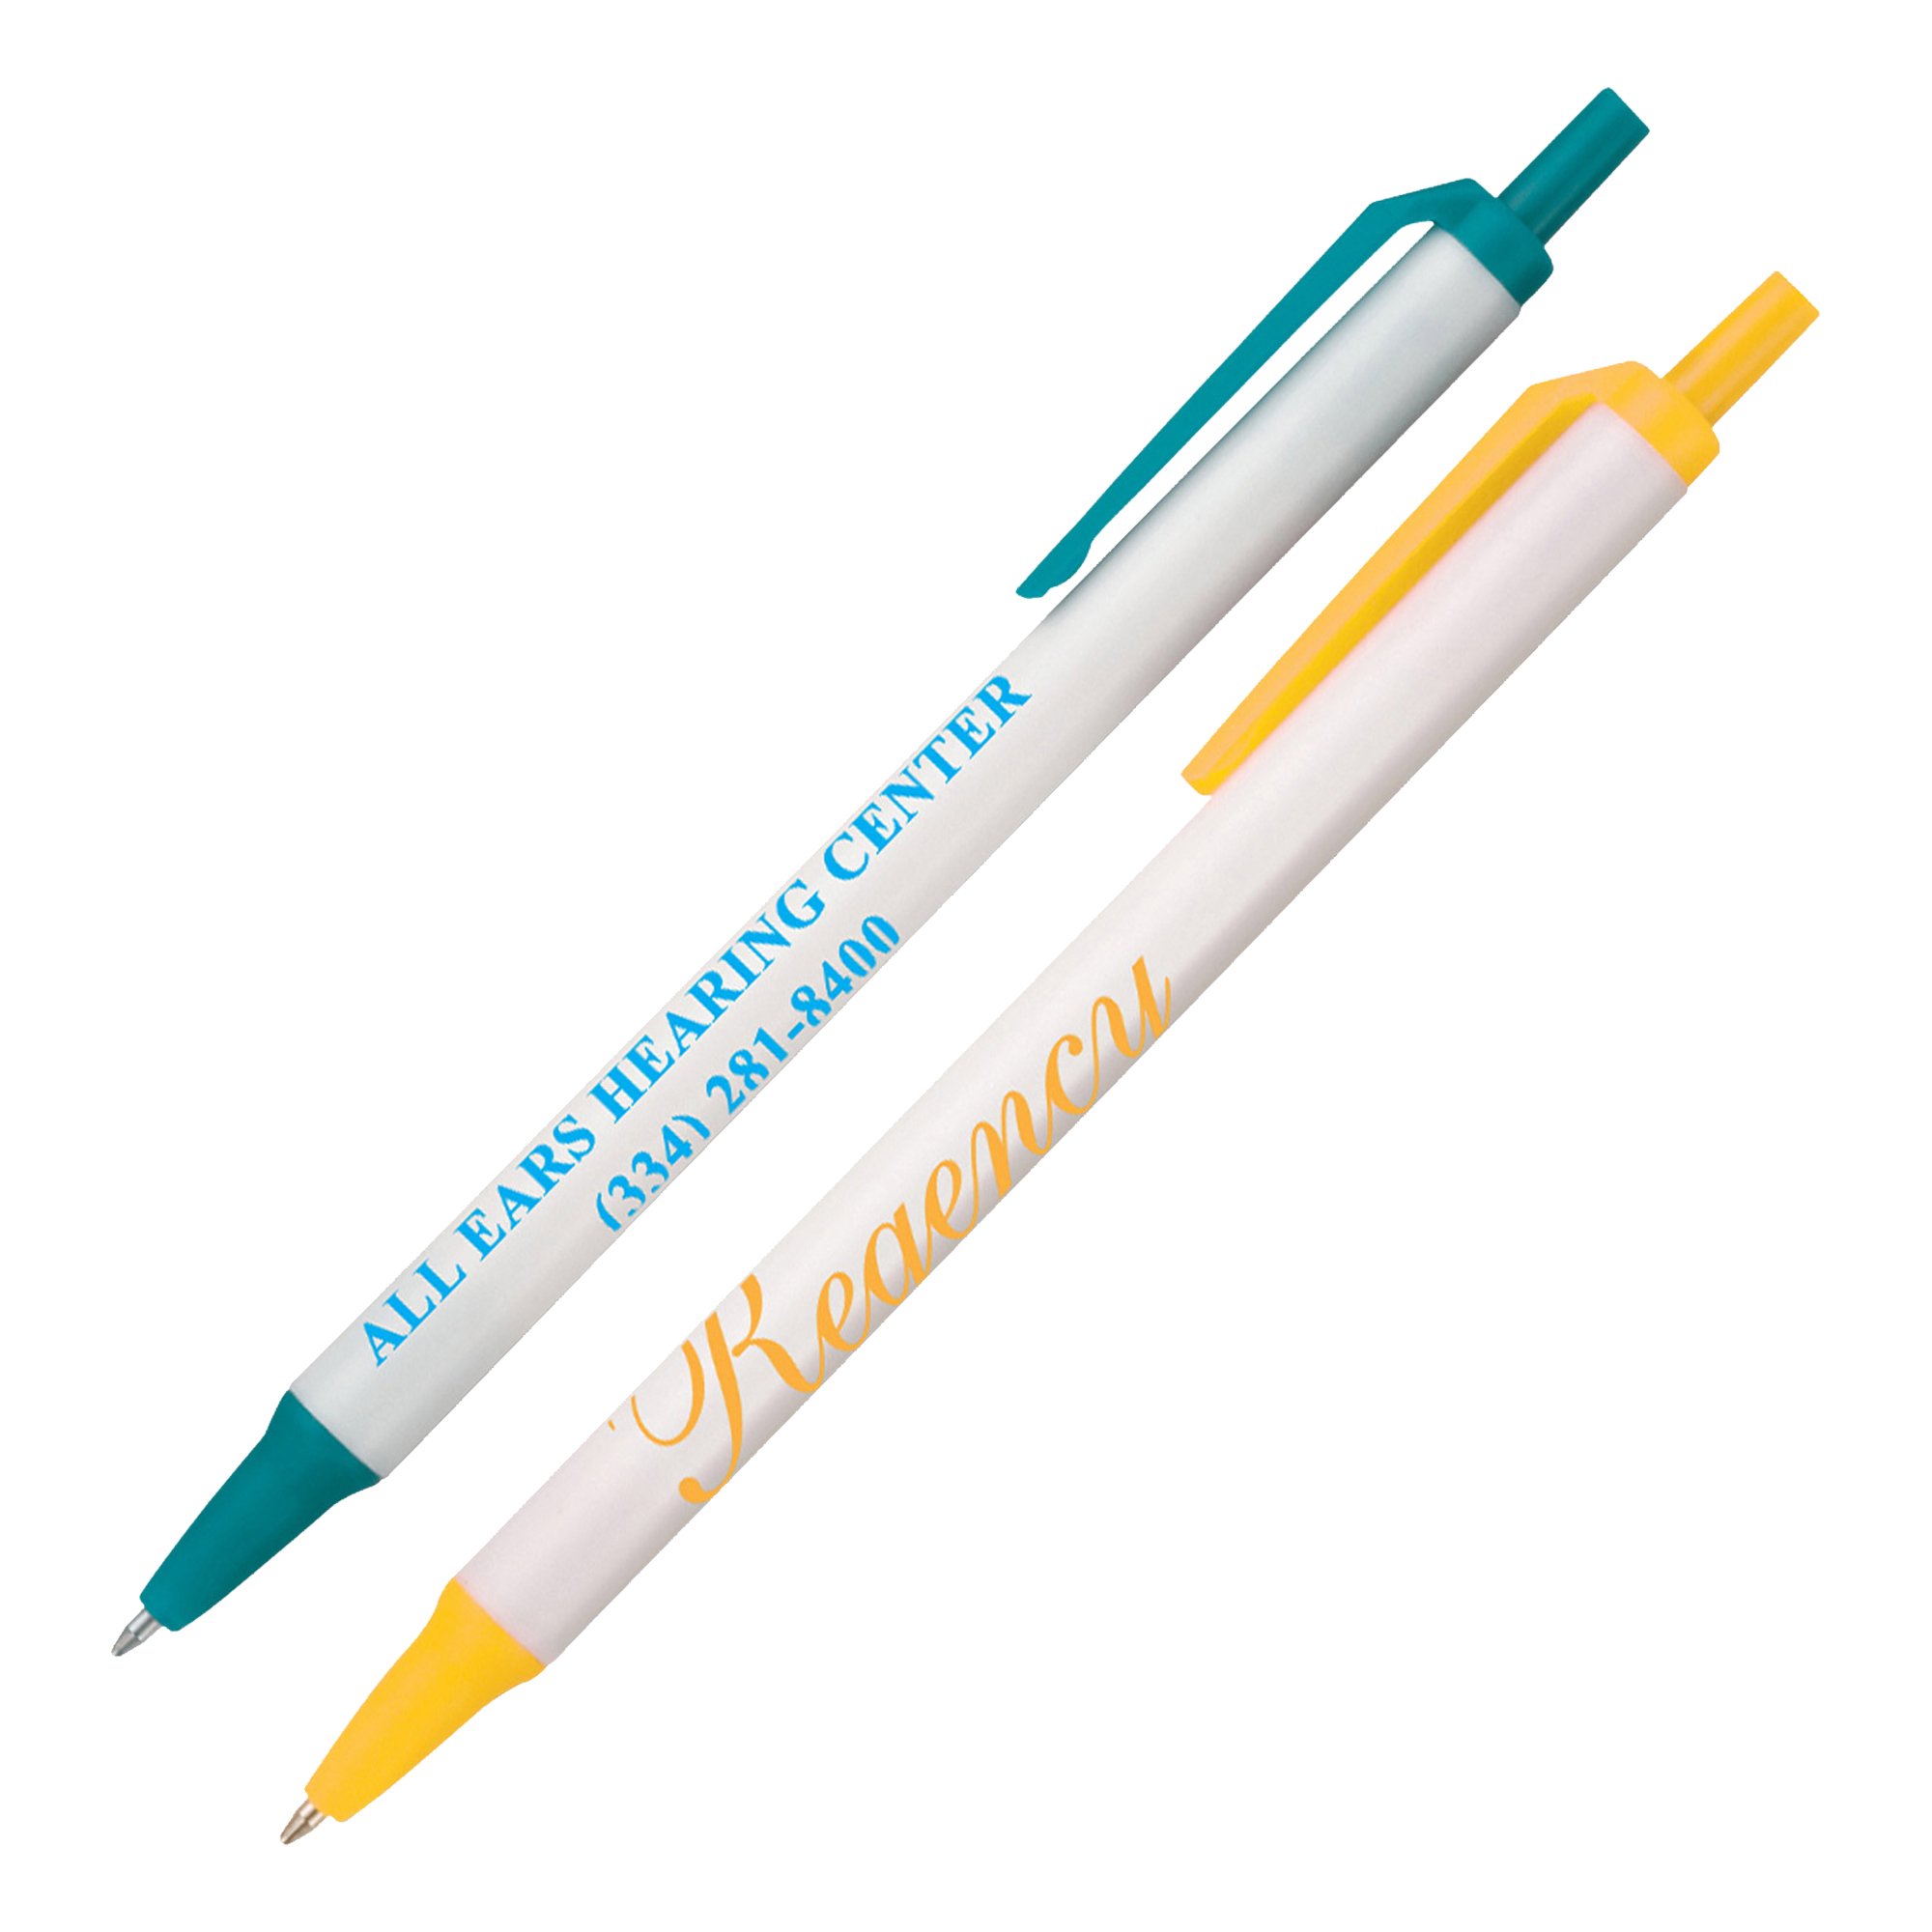 Amber Pen | Colorful Cheap Branded Pen | National Pen